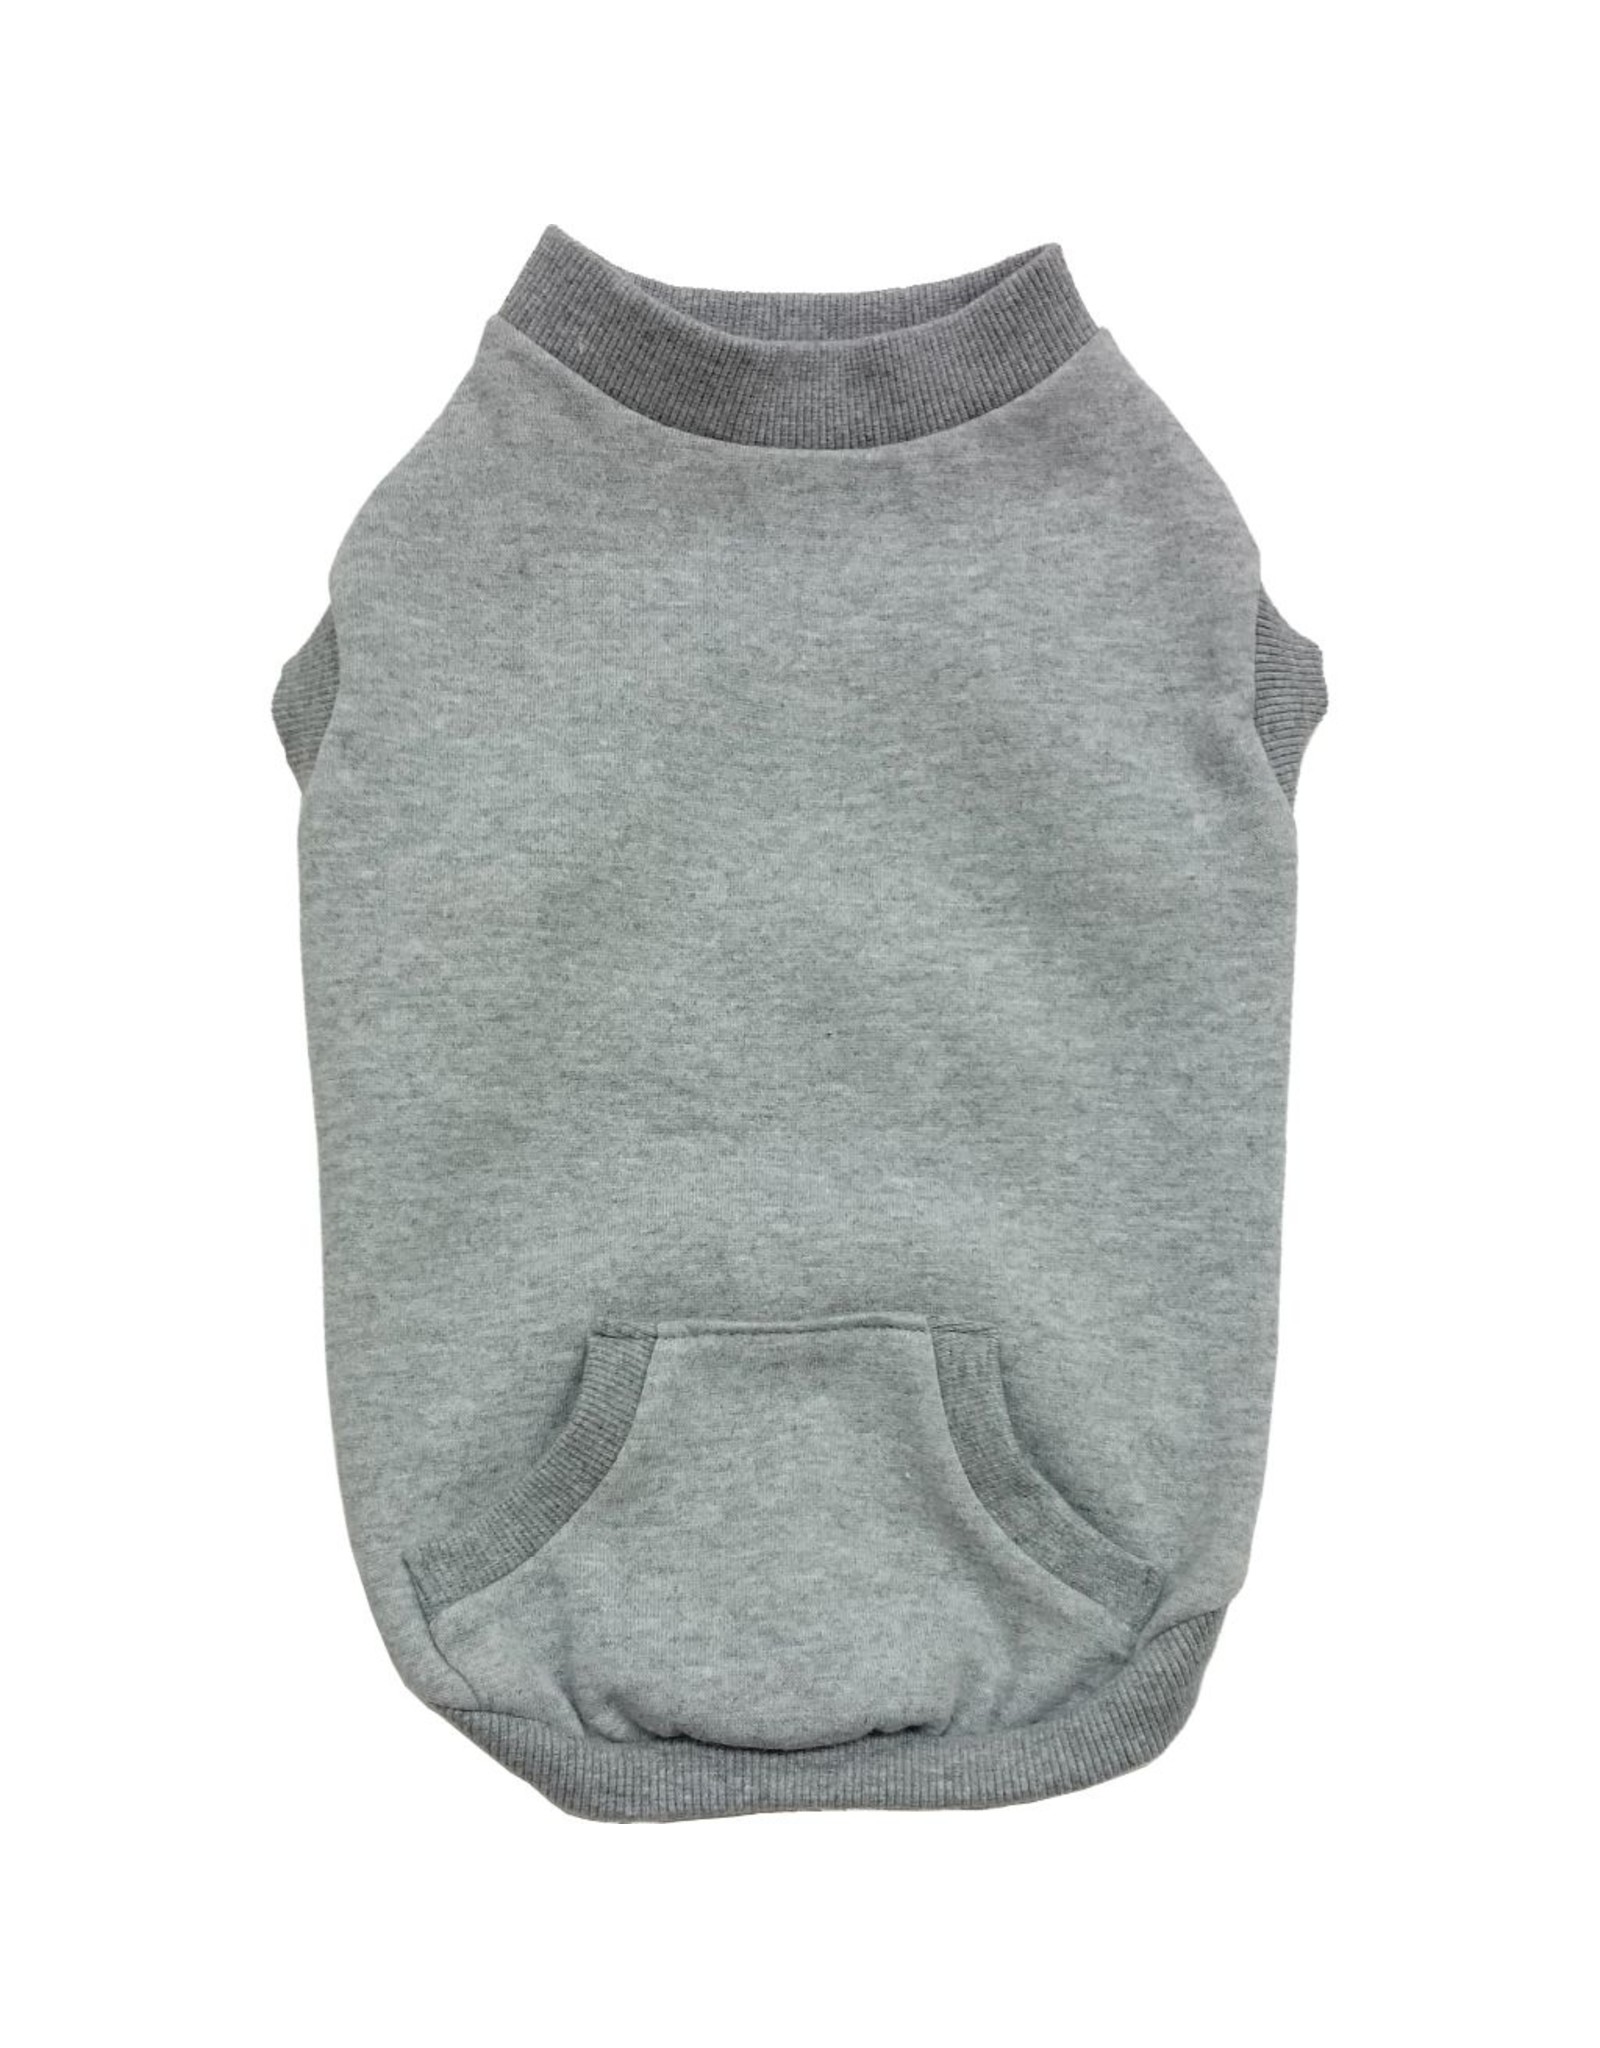 Spot - Ethical Pet Products Sweatshirt Gray XXLarge